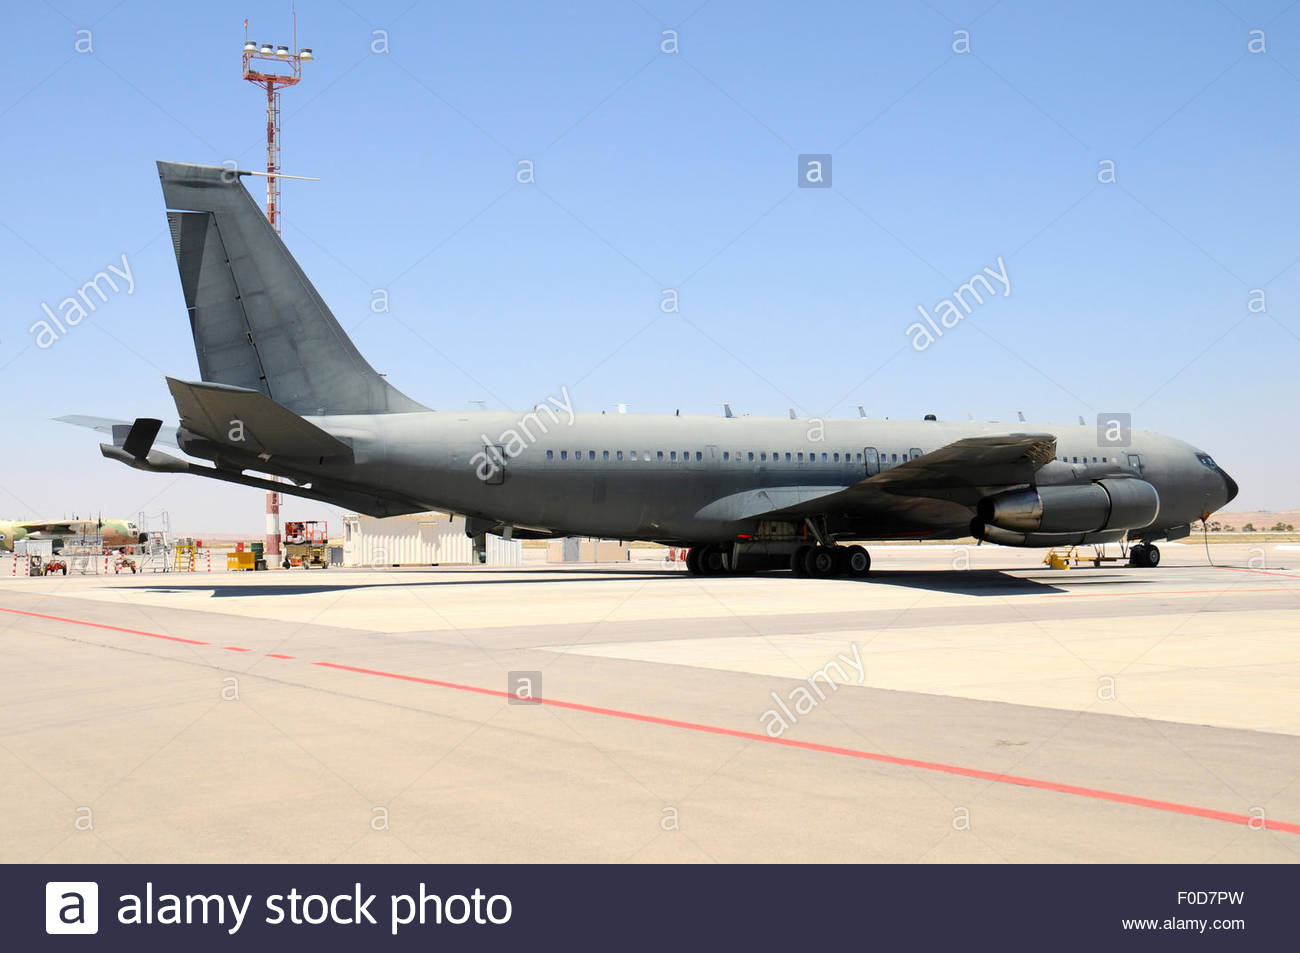 un-boeing-707-de-la-force-aerienne-israelienne-re-em-tanker-sur-la-piste-a-la-base-aerienne-de-nevatim-israel-f0d7pw.jpg